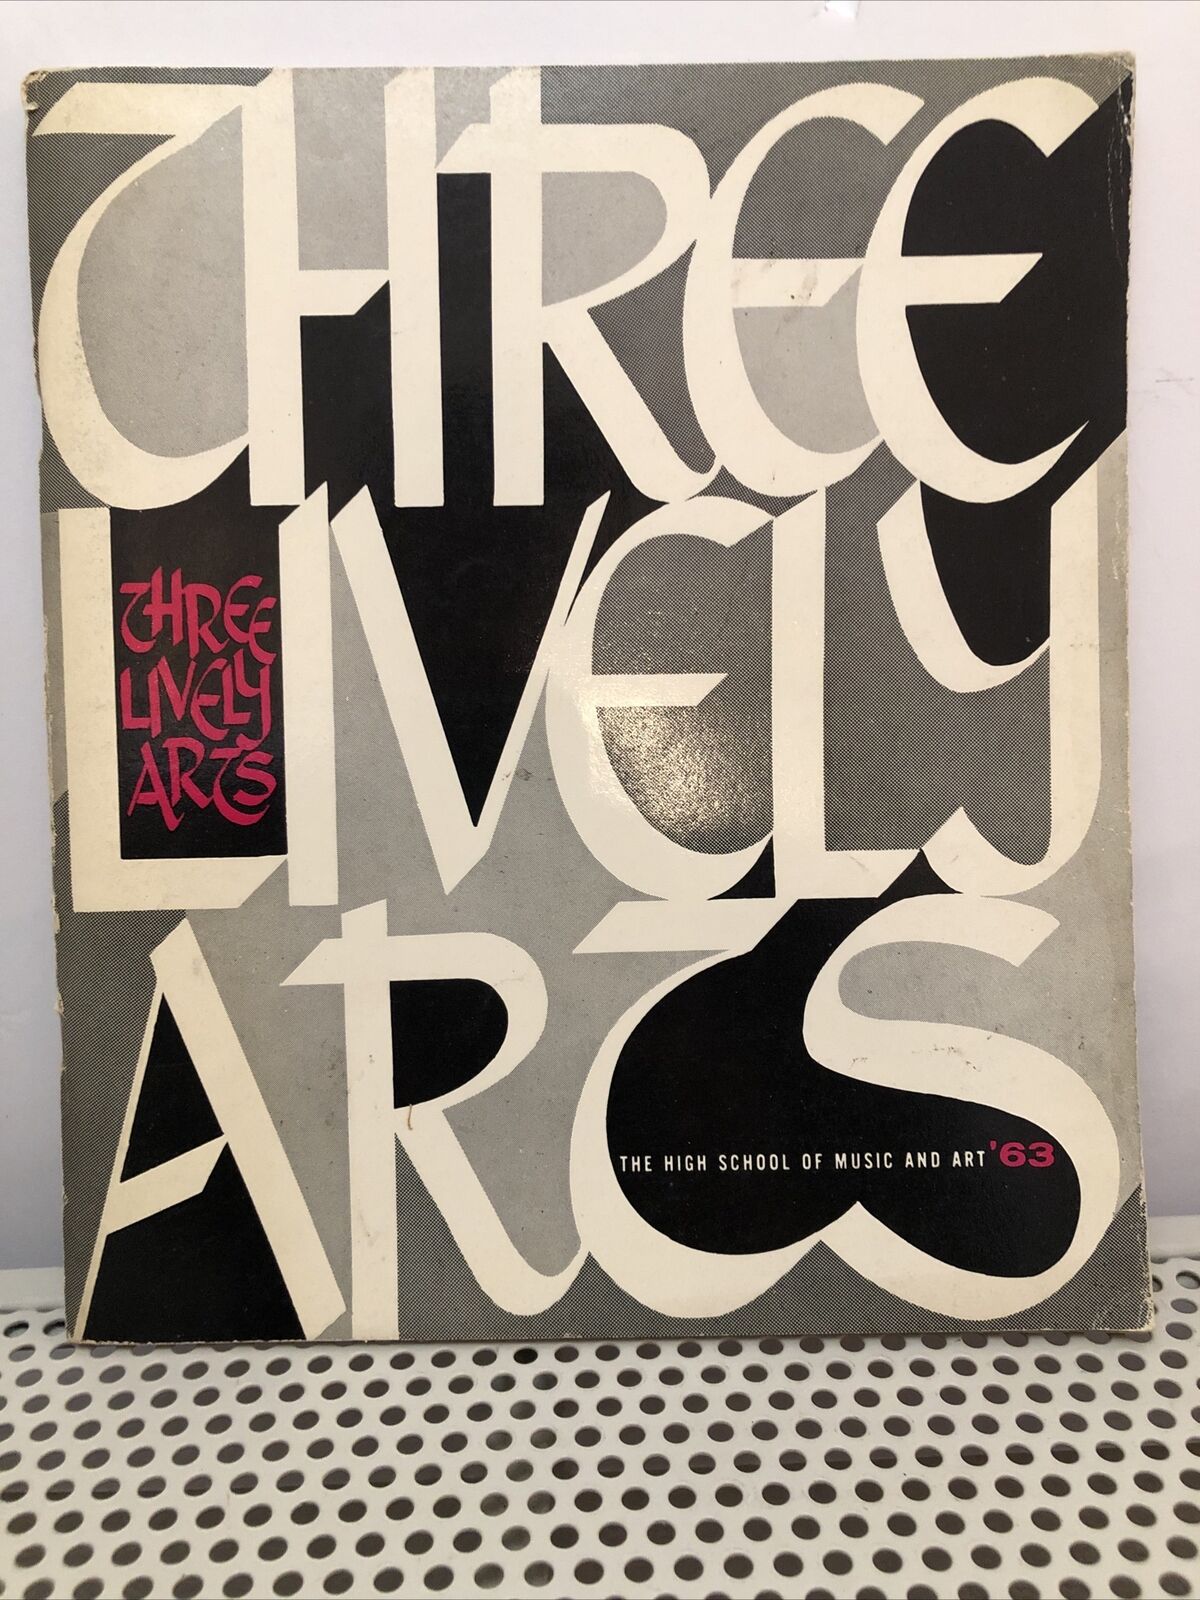 Three Lively Arts The High School Of Music & Art 63 1963 Louis Wechsler